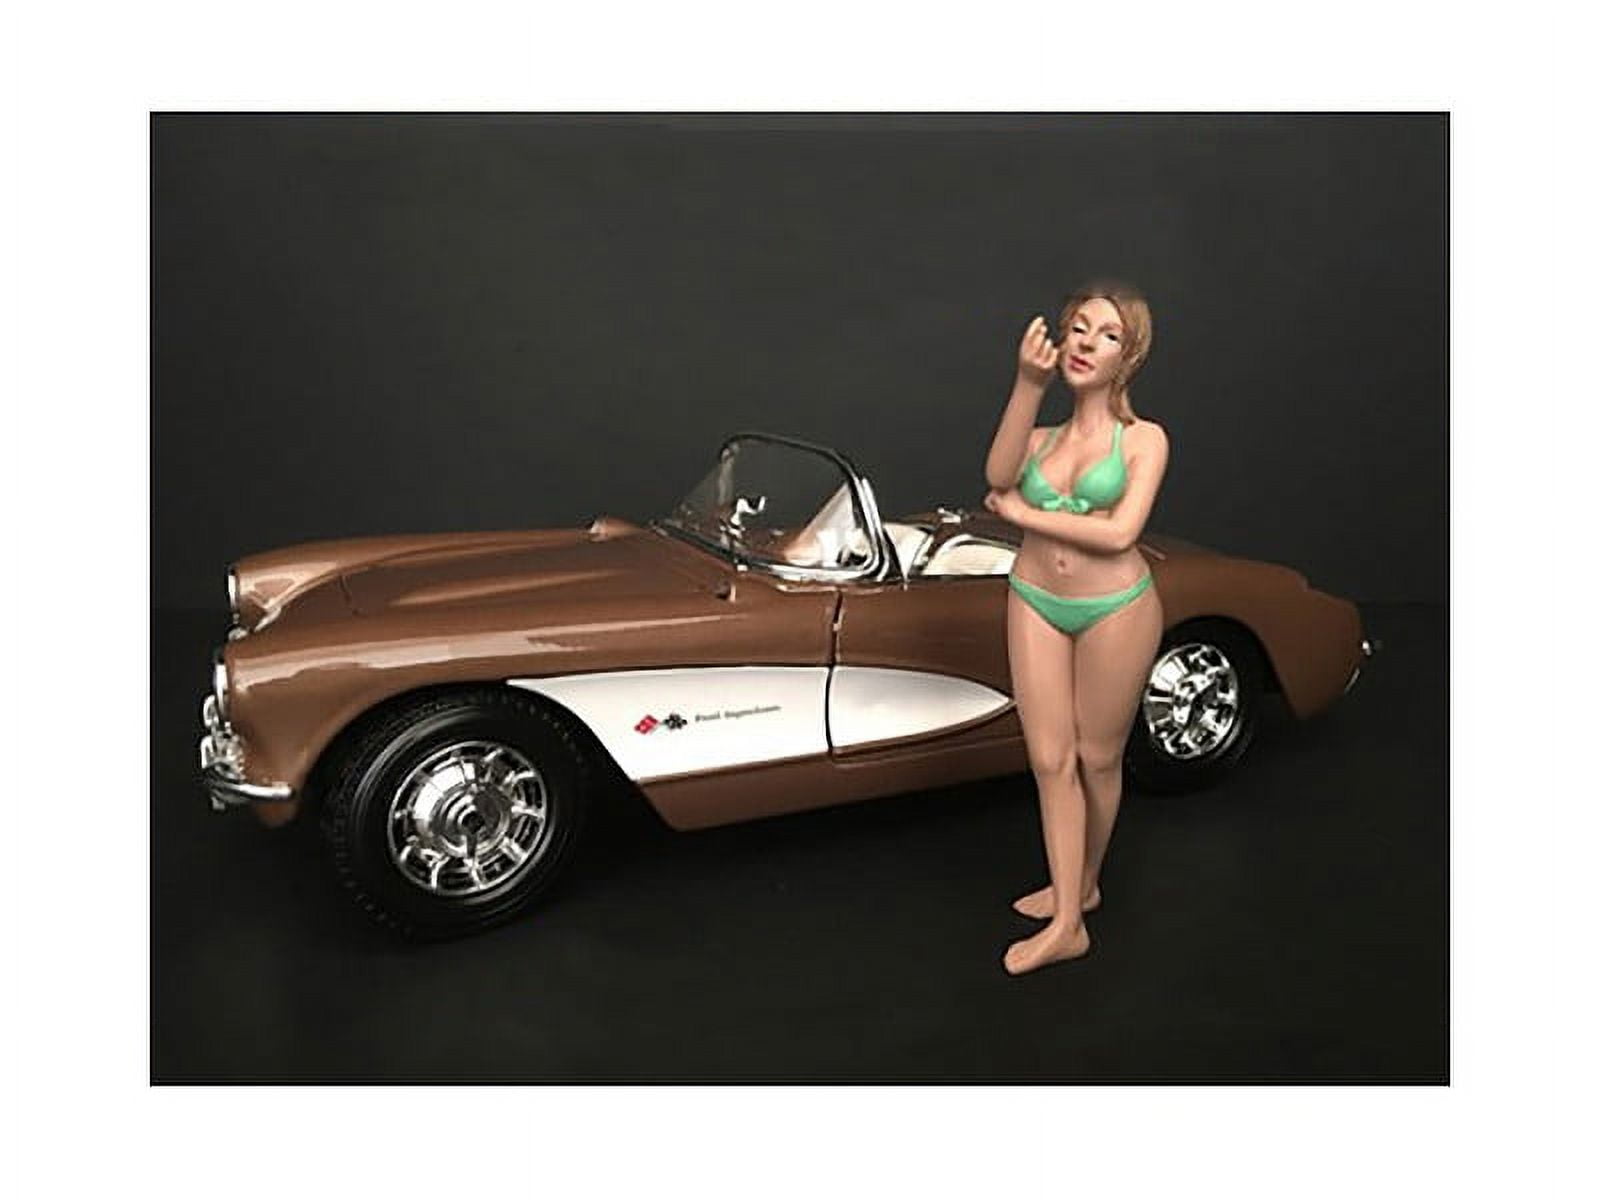 38172 August Bikini Calendar Girl Figurine For 1-18 Scale Model